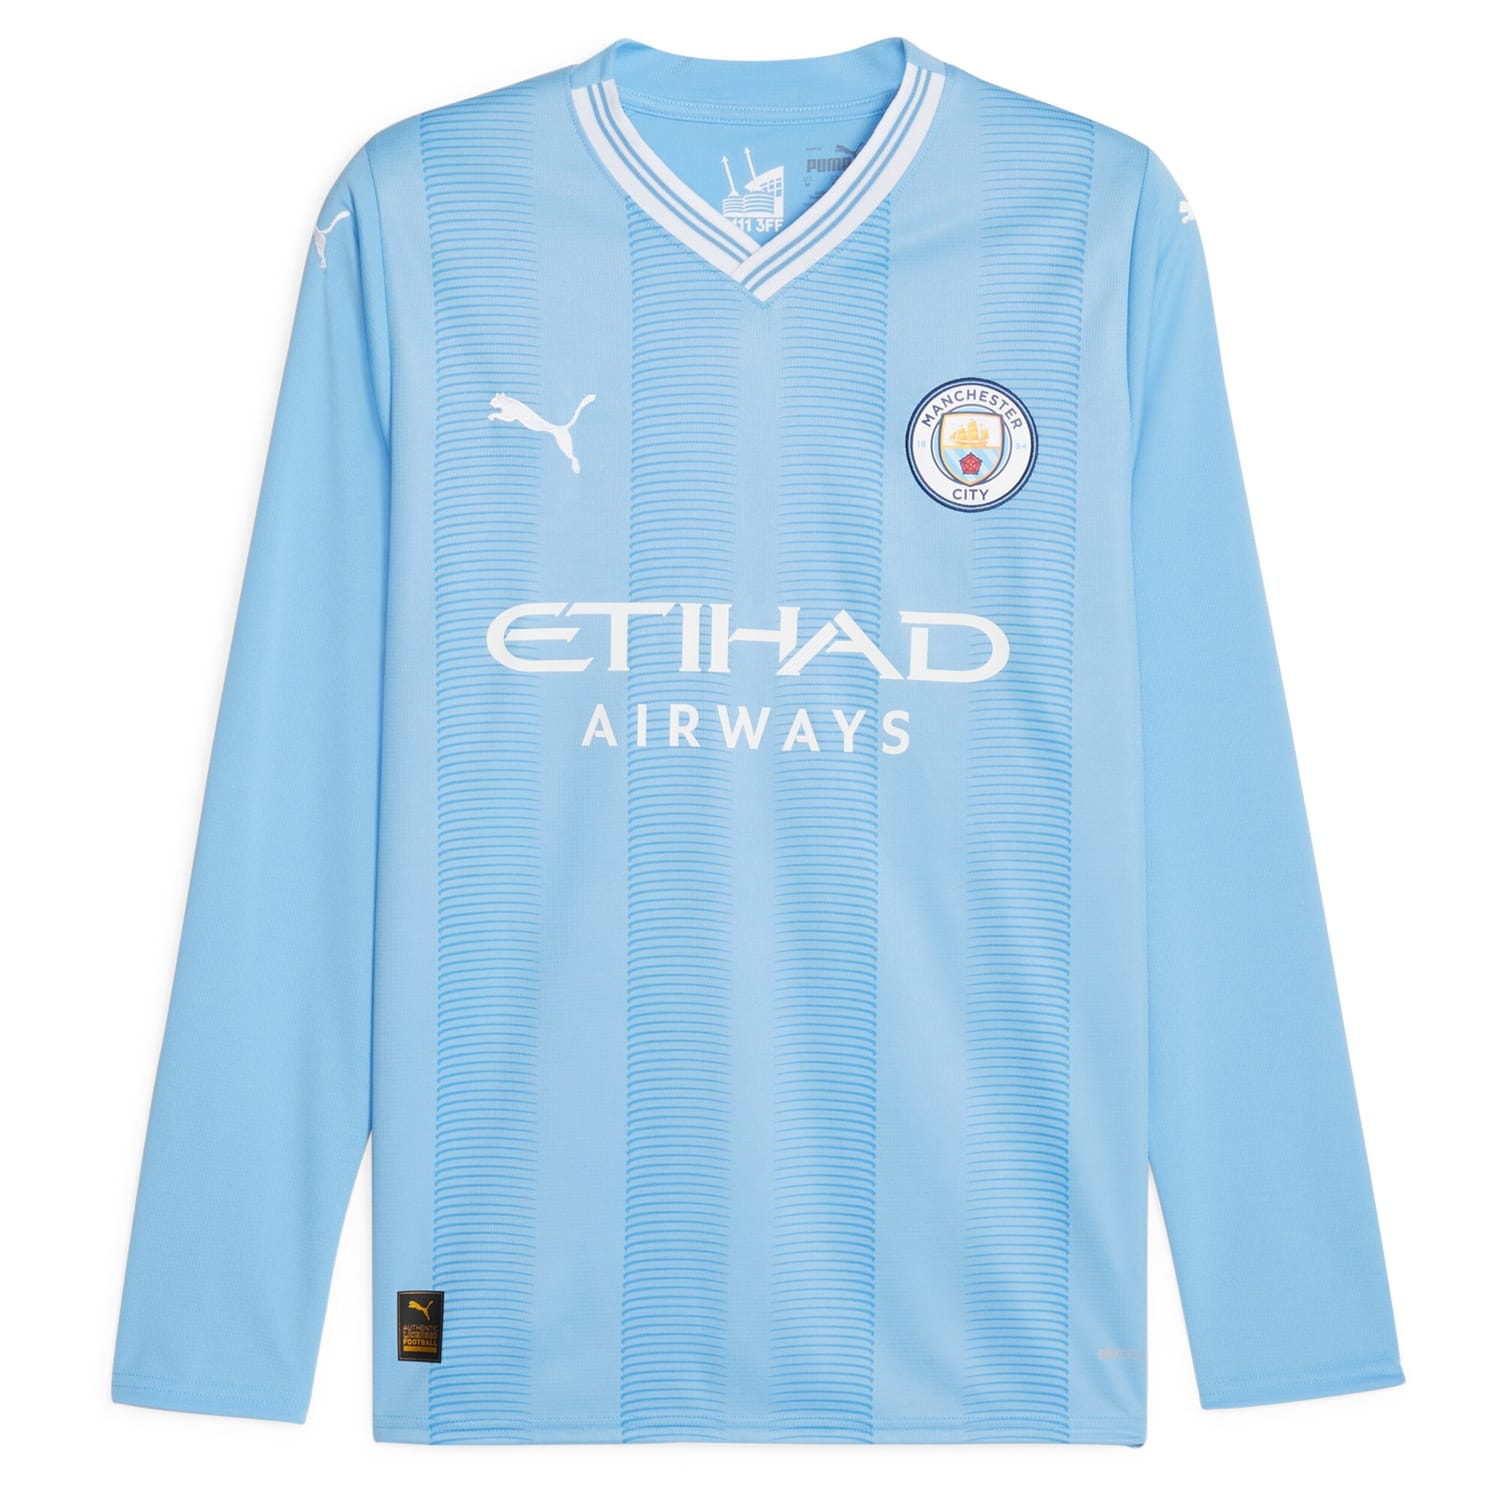 Premier League Manchester City Home Jersey Shirt Long Sleeve 2023-24 player Bernardo Silva 20 printing for Men